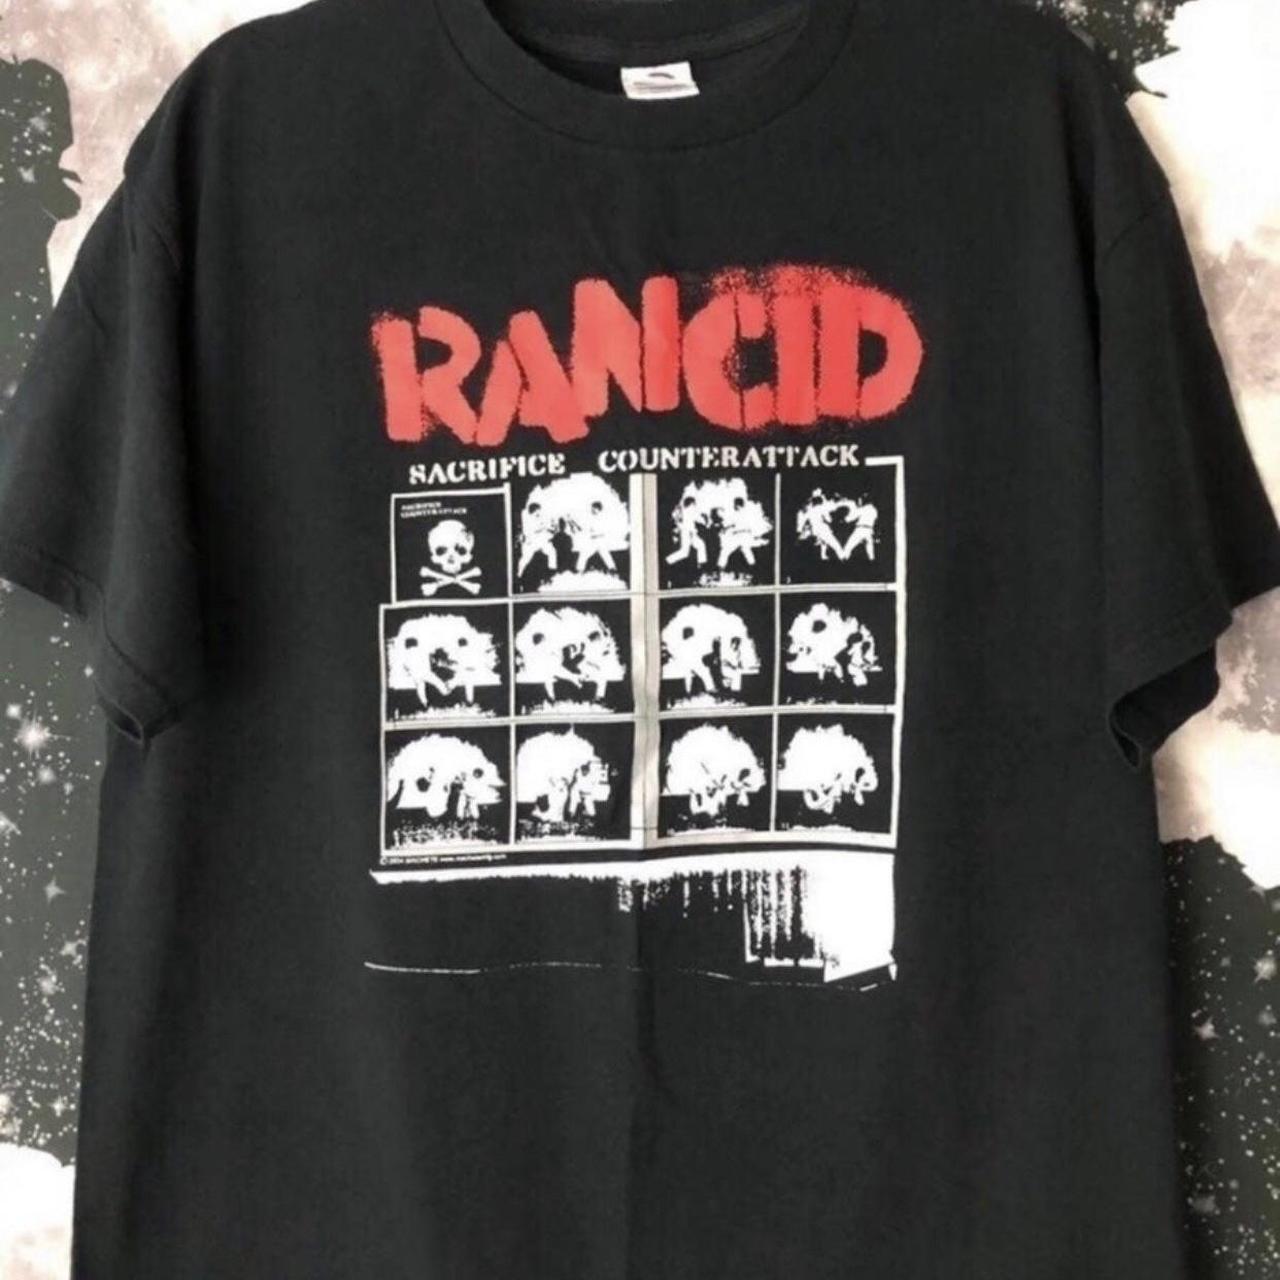 Rancid album shirt, color is black with front... - Depop